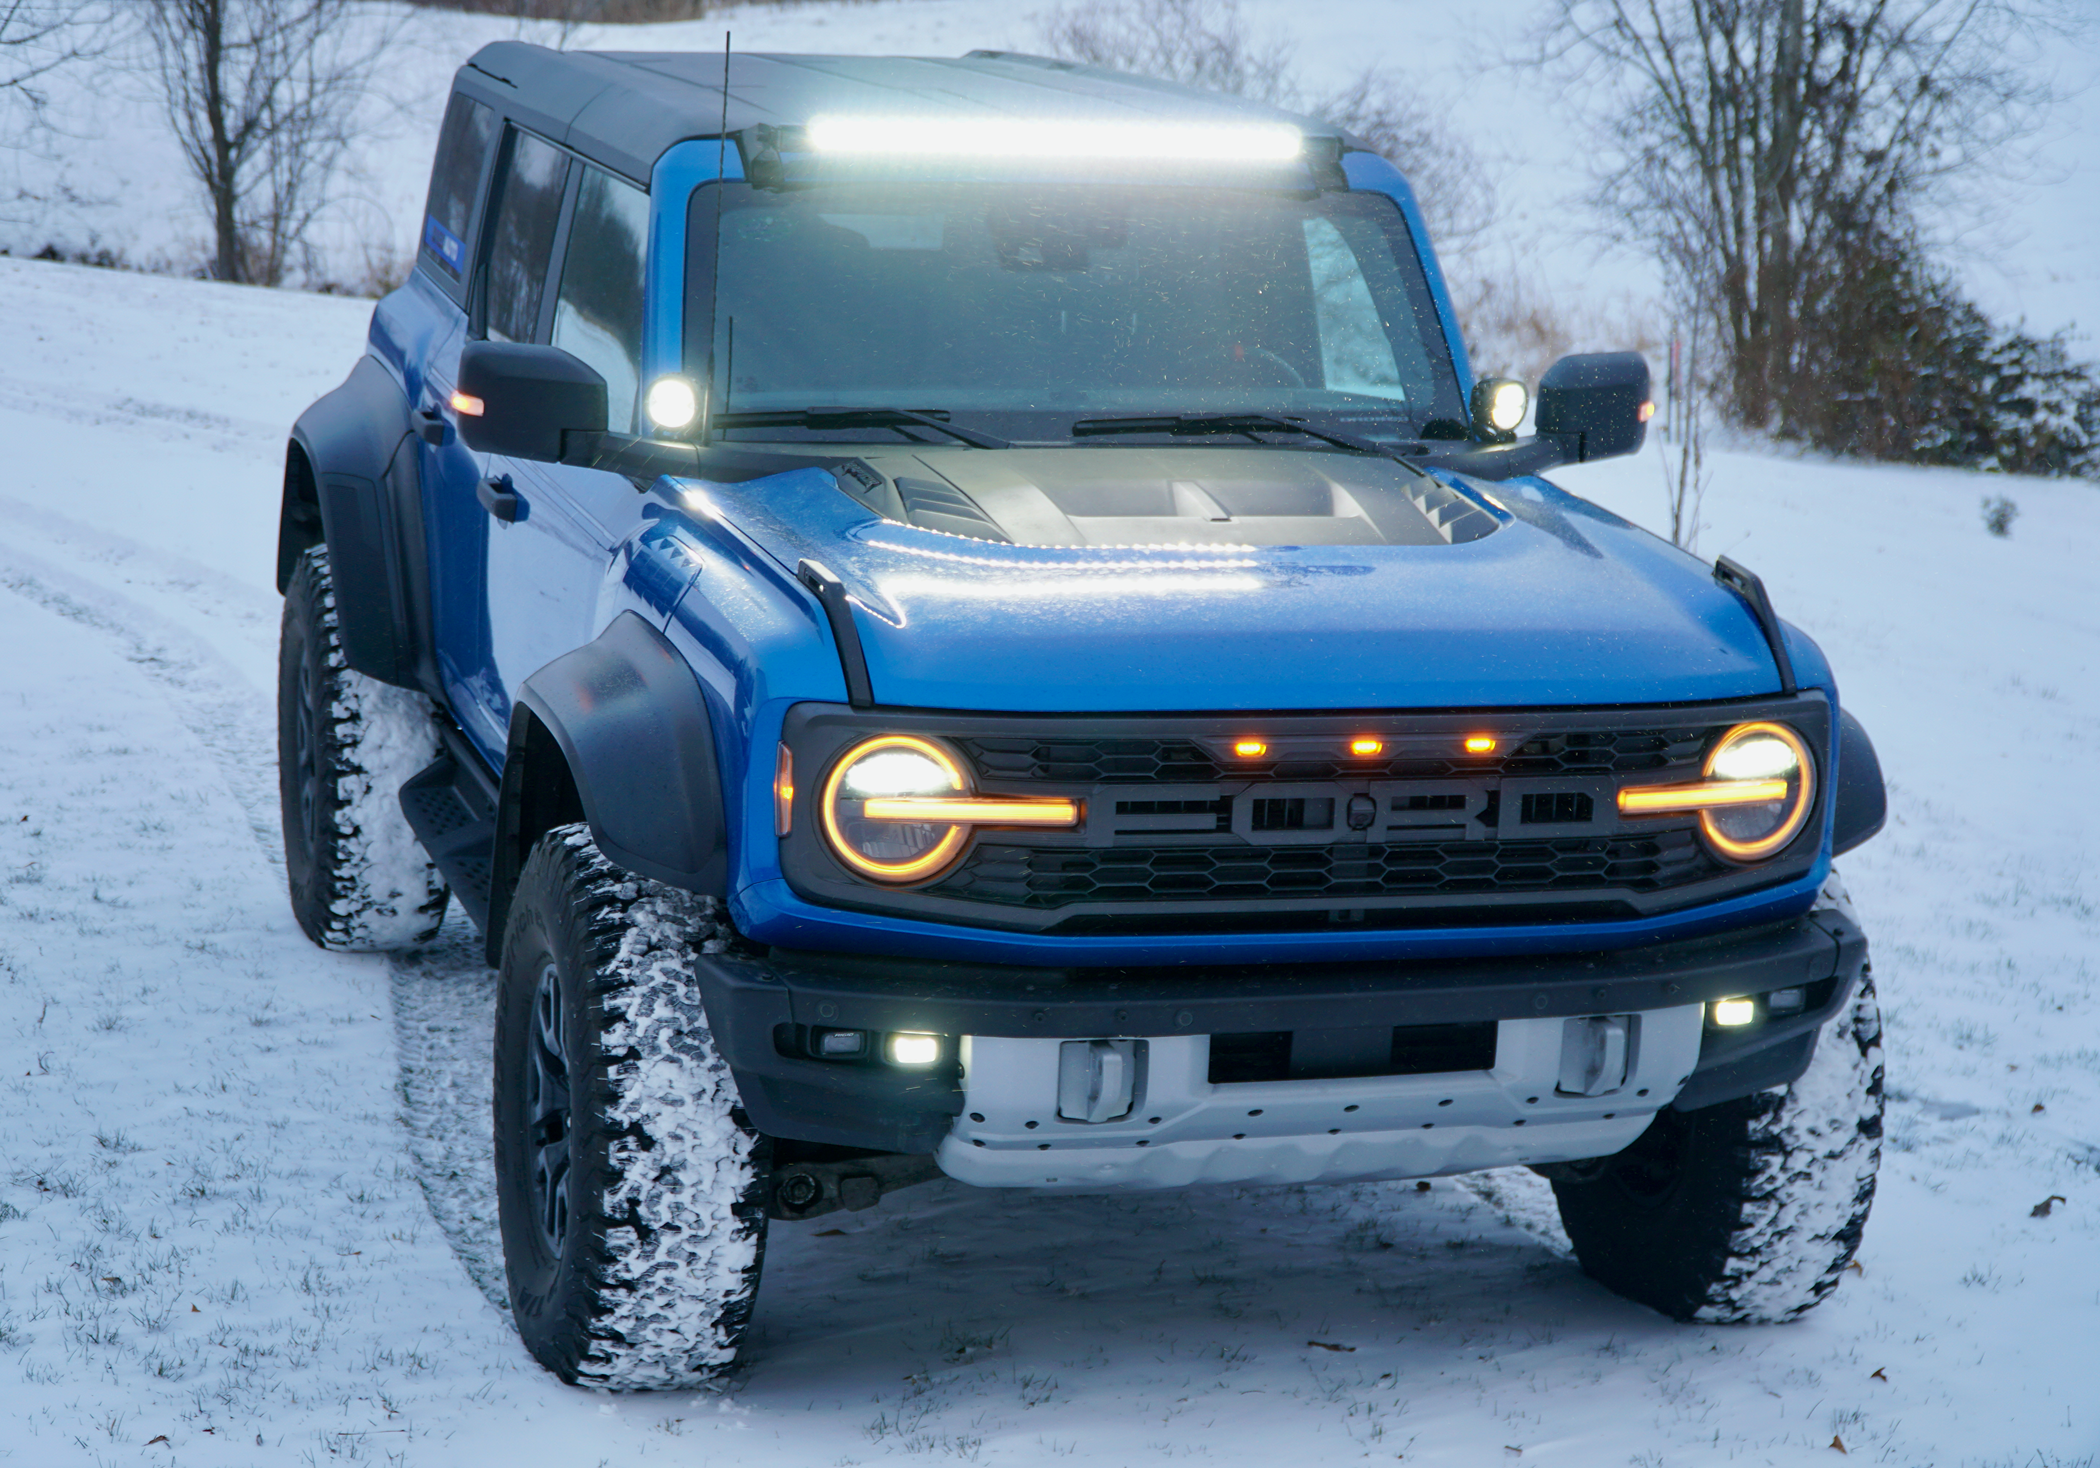 Ford Bronco ❄️❄️❄️❄️ Snow Day Saturday ❄️❄️❄️❄️❄️ IMG_2464